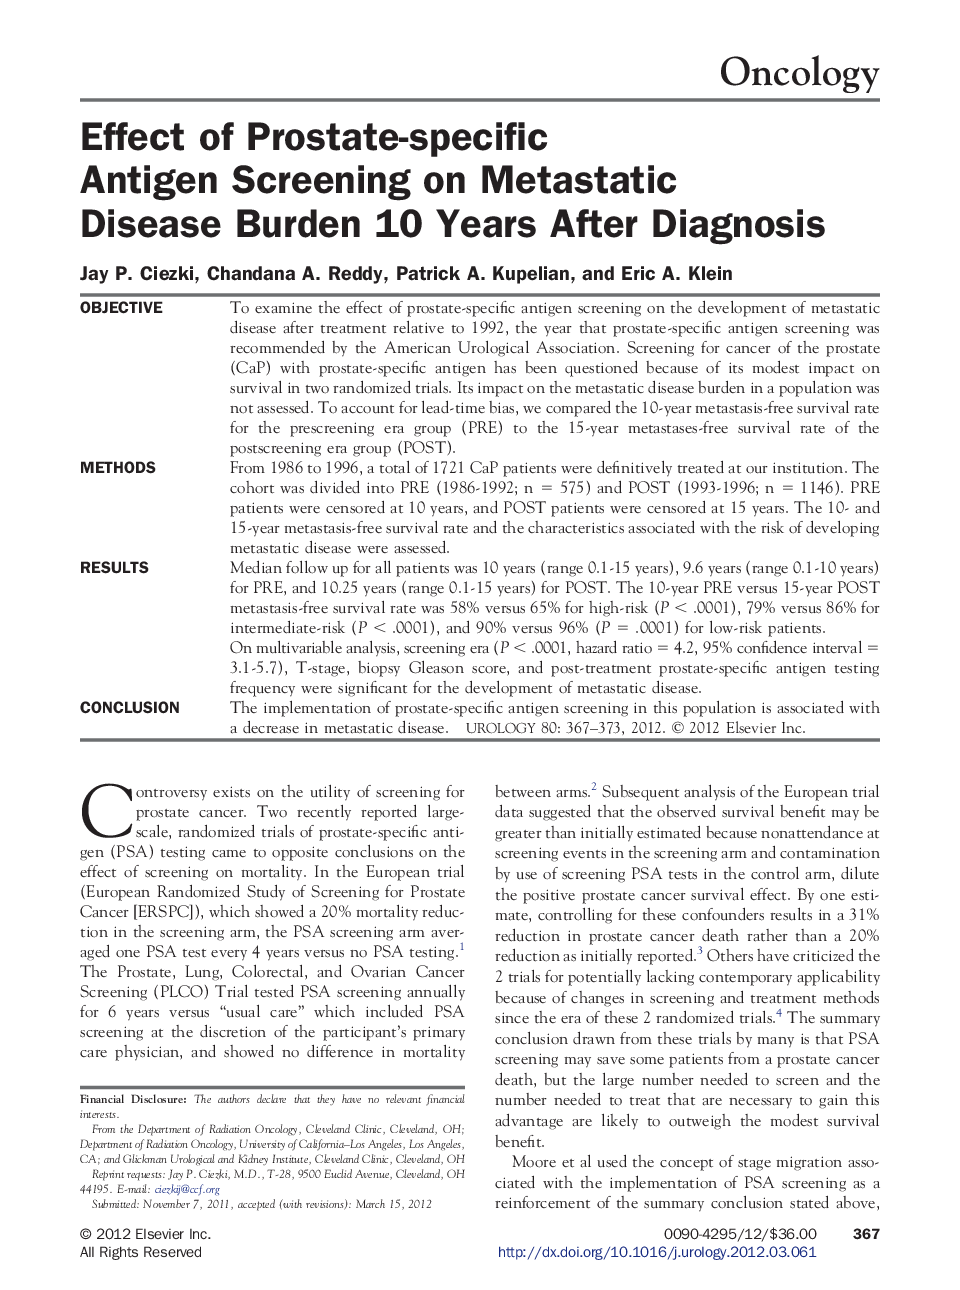 Effect of Prostate-specific Antigen Screening on Metastatic Disease Burden 10 Years After Diagnosis 